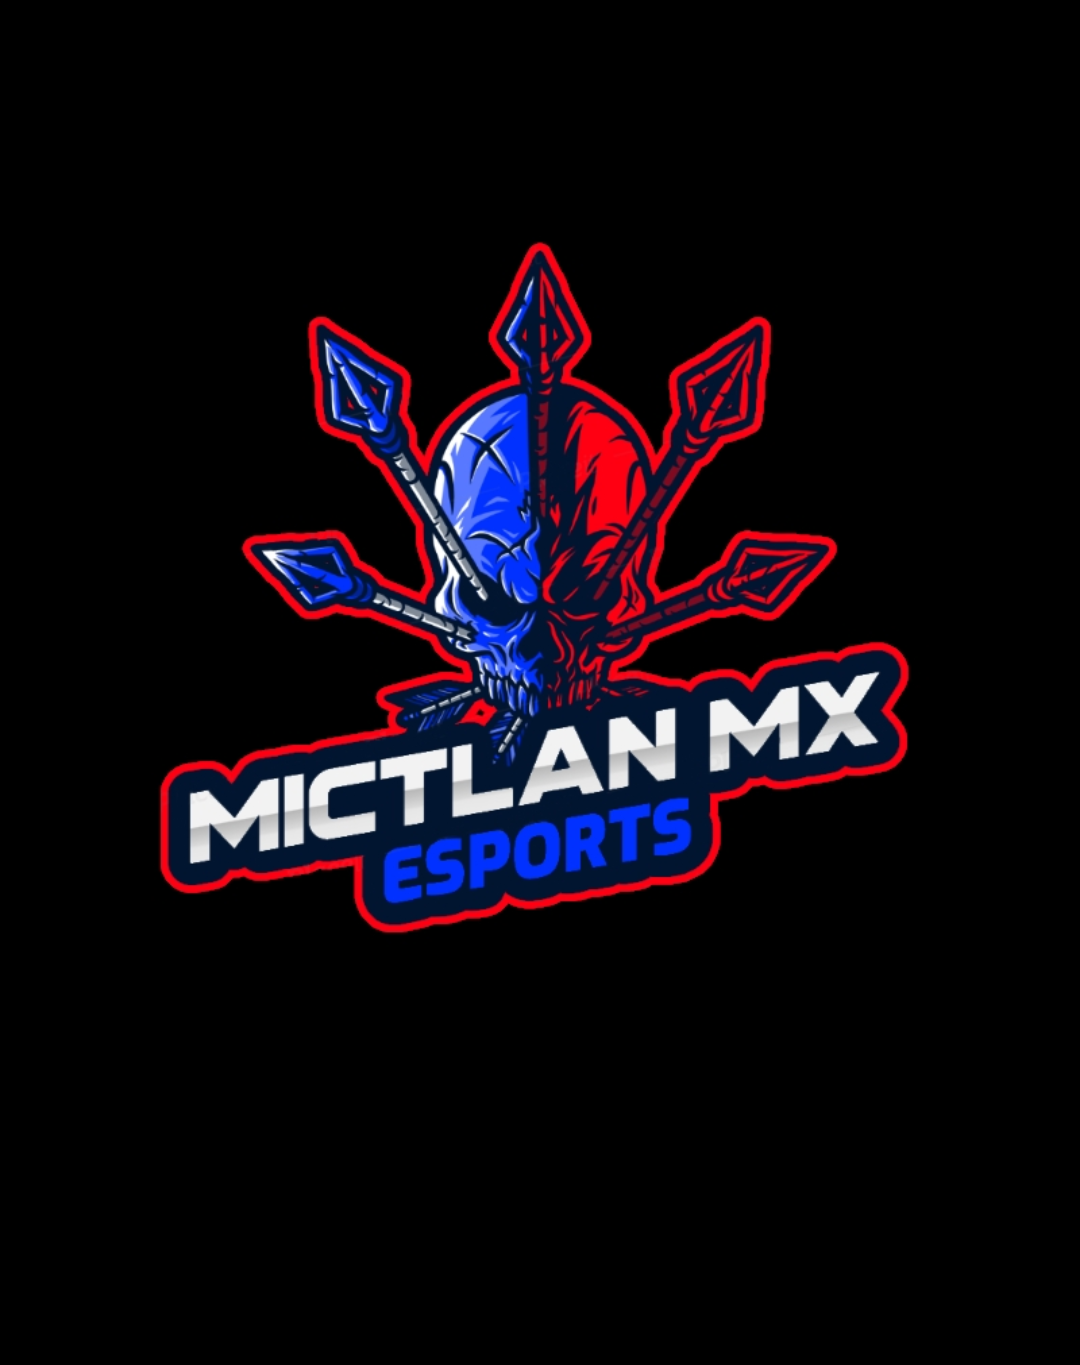 Logo-Mictlan MX eSports1111112206.png